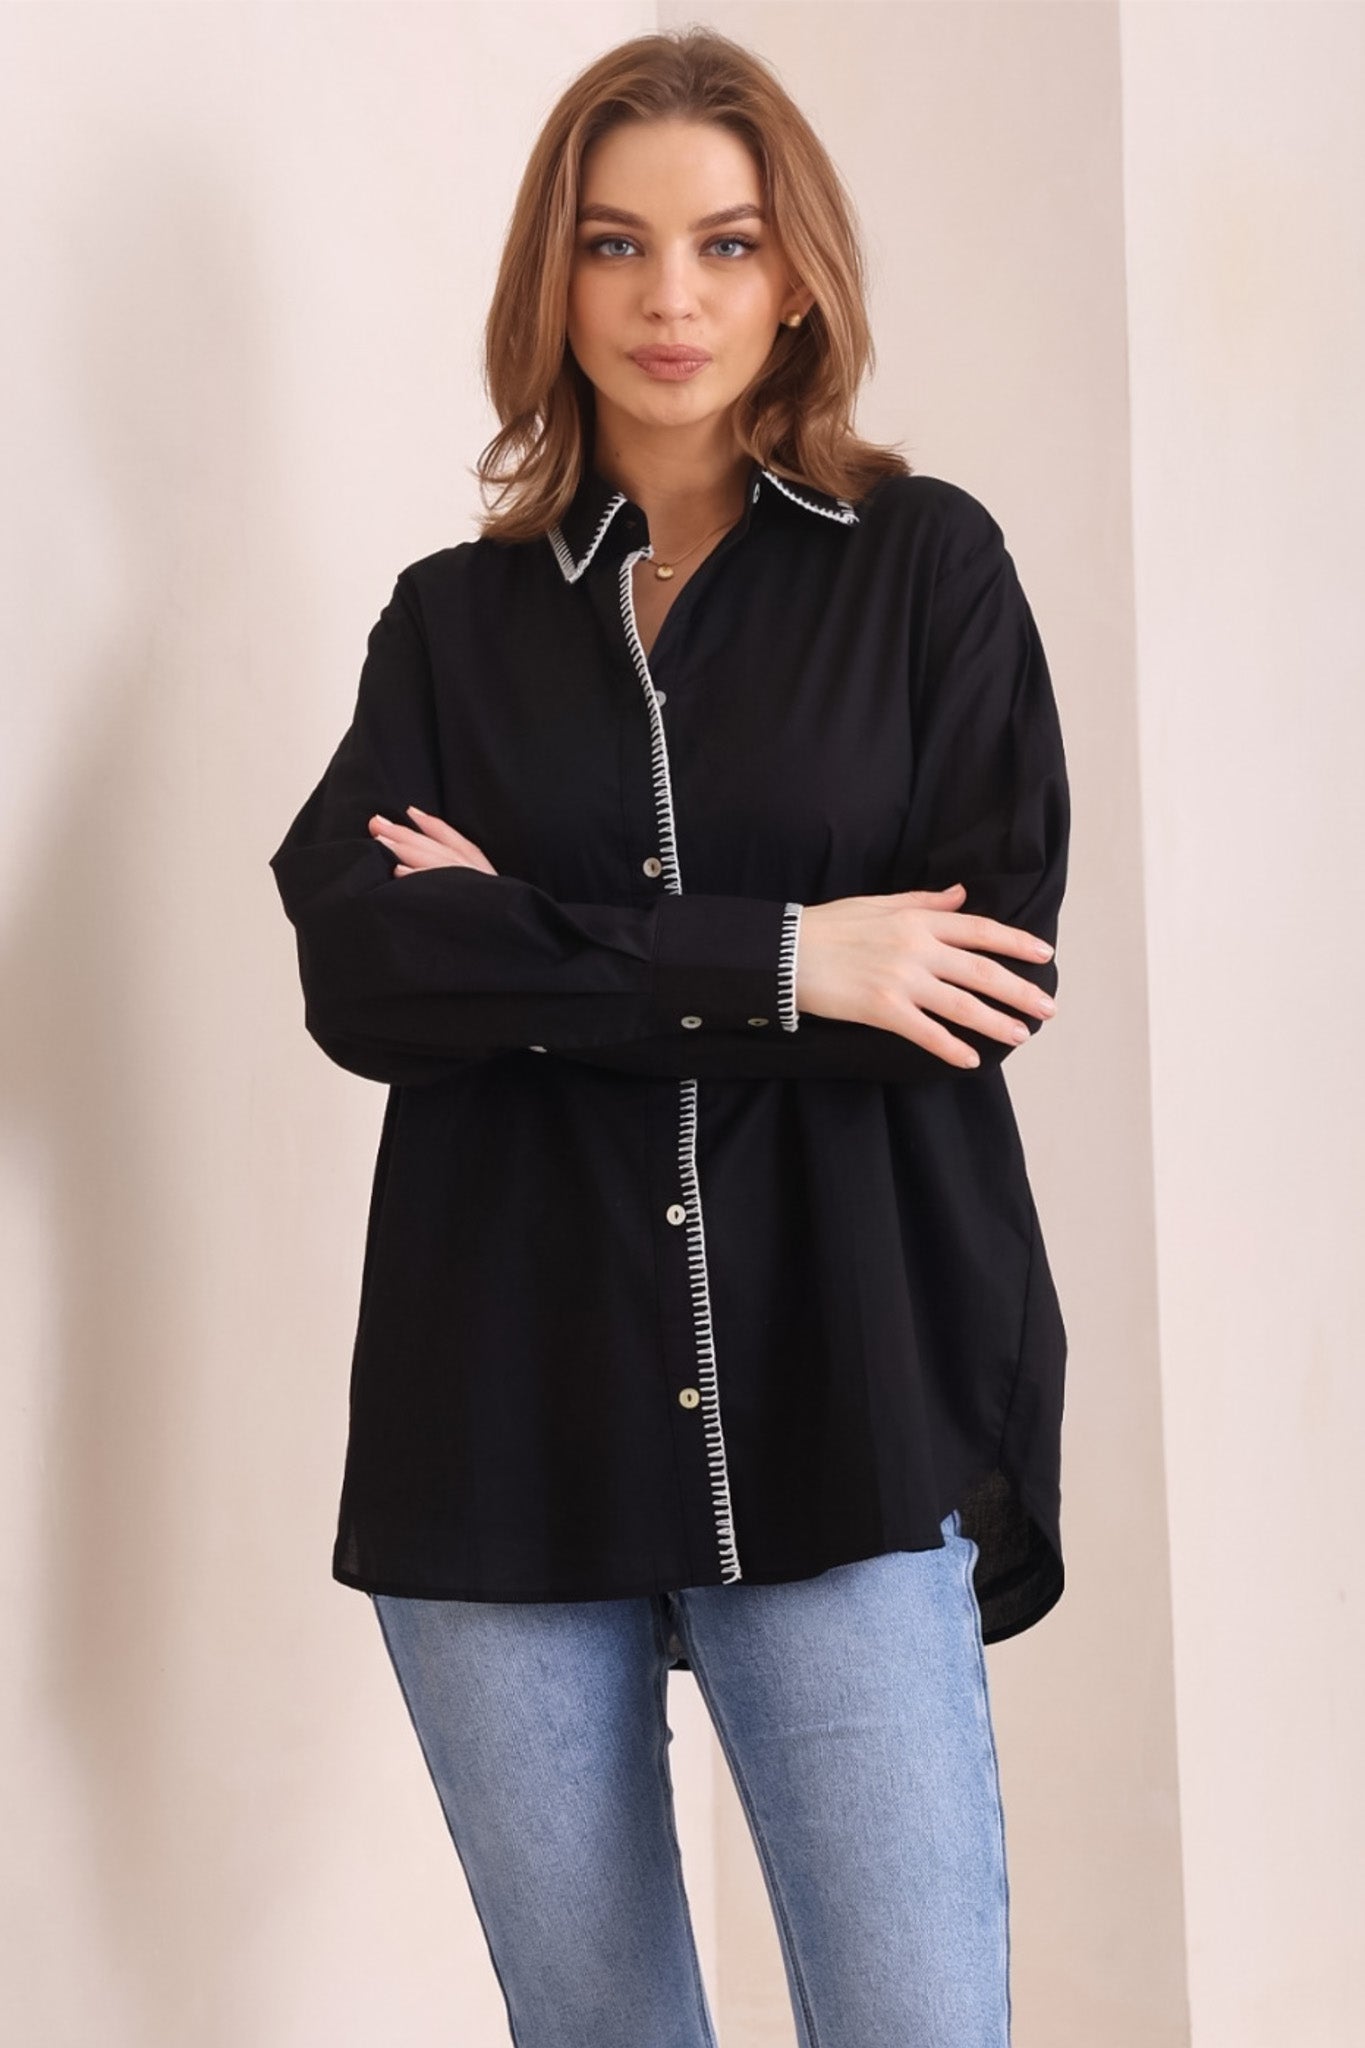 Whistler Shirt - Contrast Stitch Button Down Shirt in Black